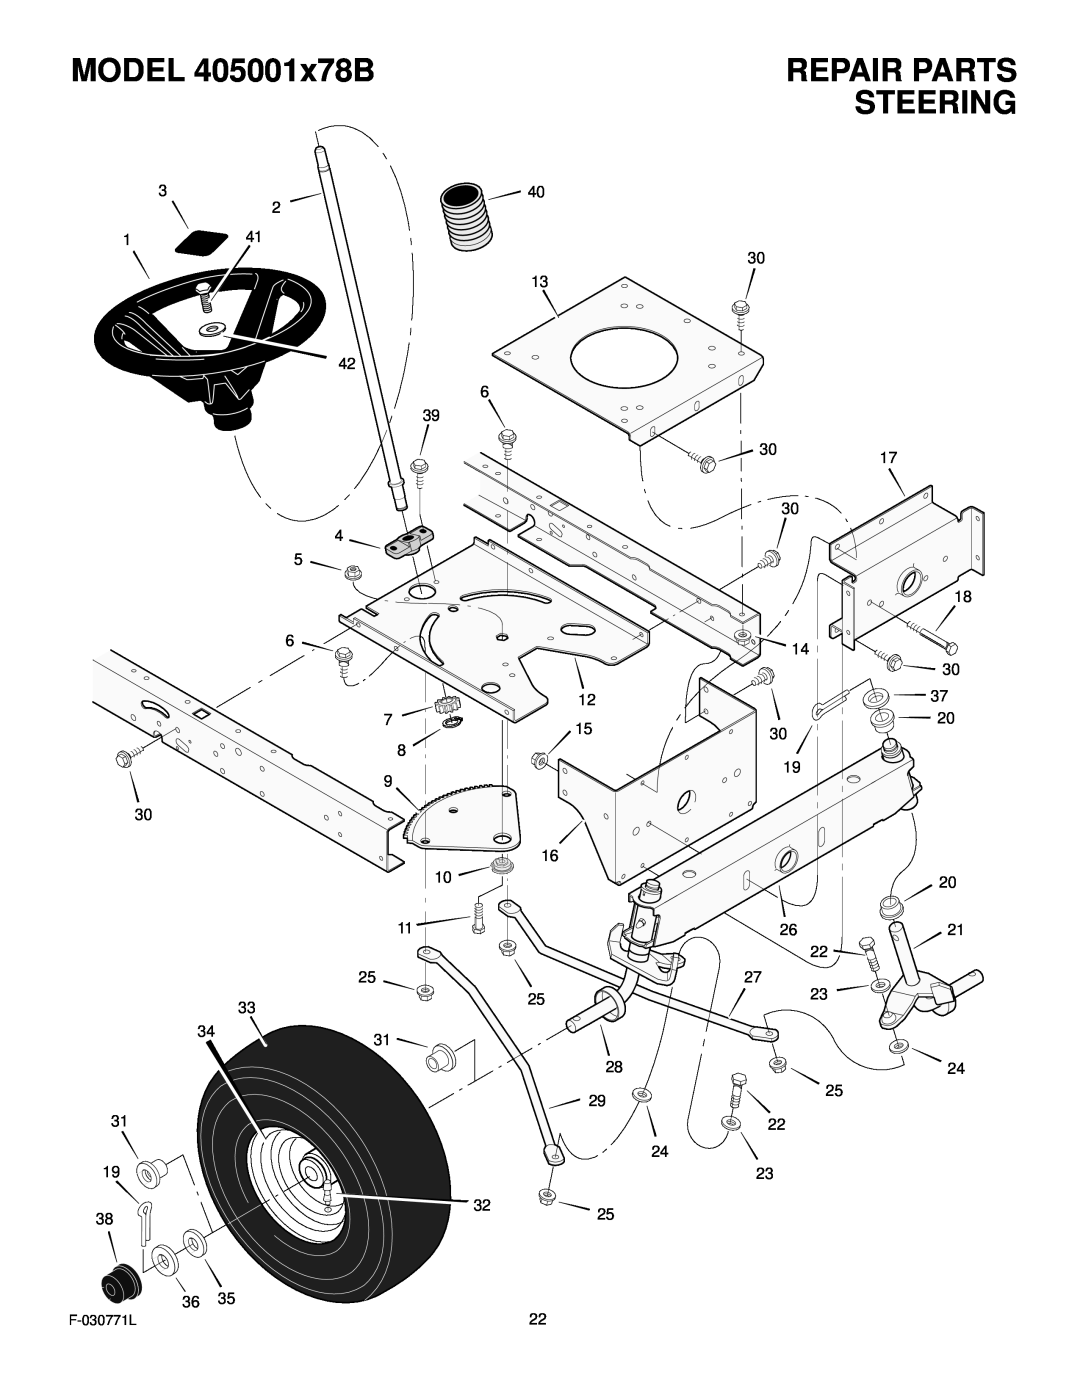 Murray manual Steering, MODEL 405001x78B, Repair Parts, 3017, F-030771L 